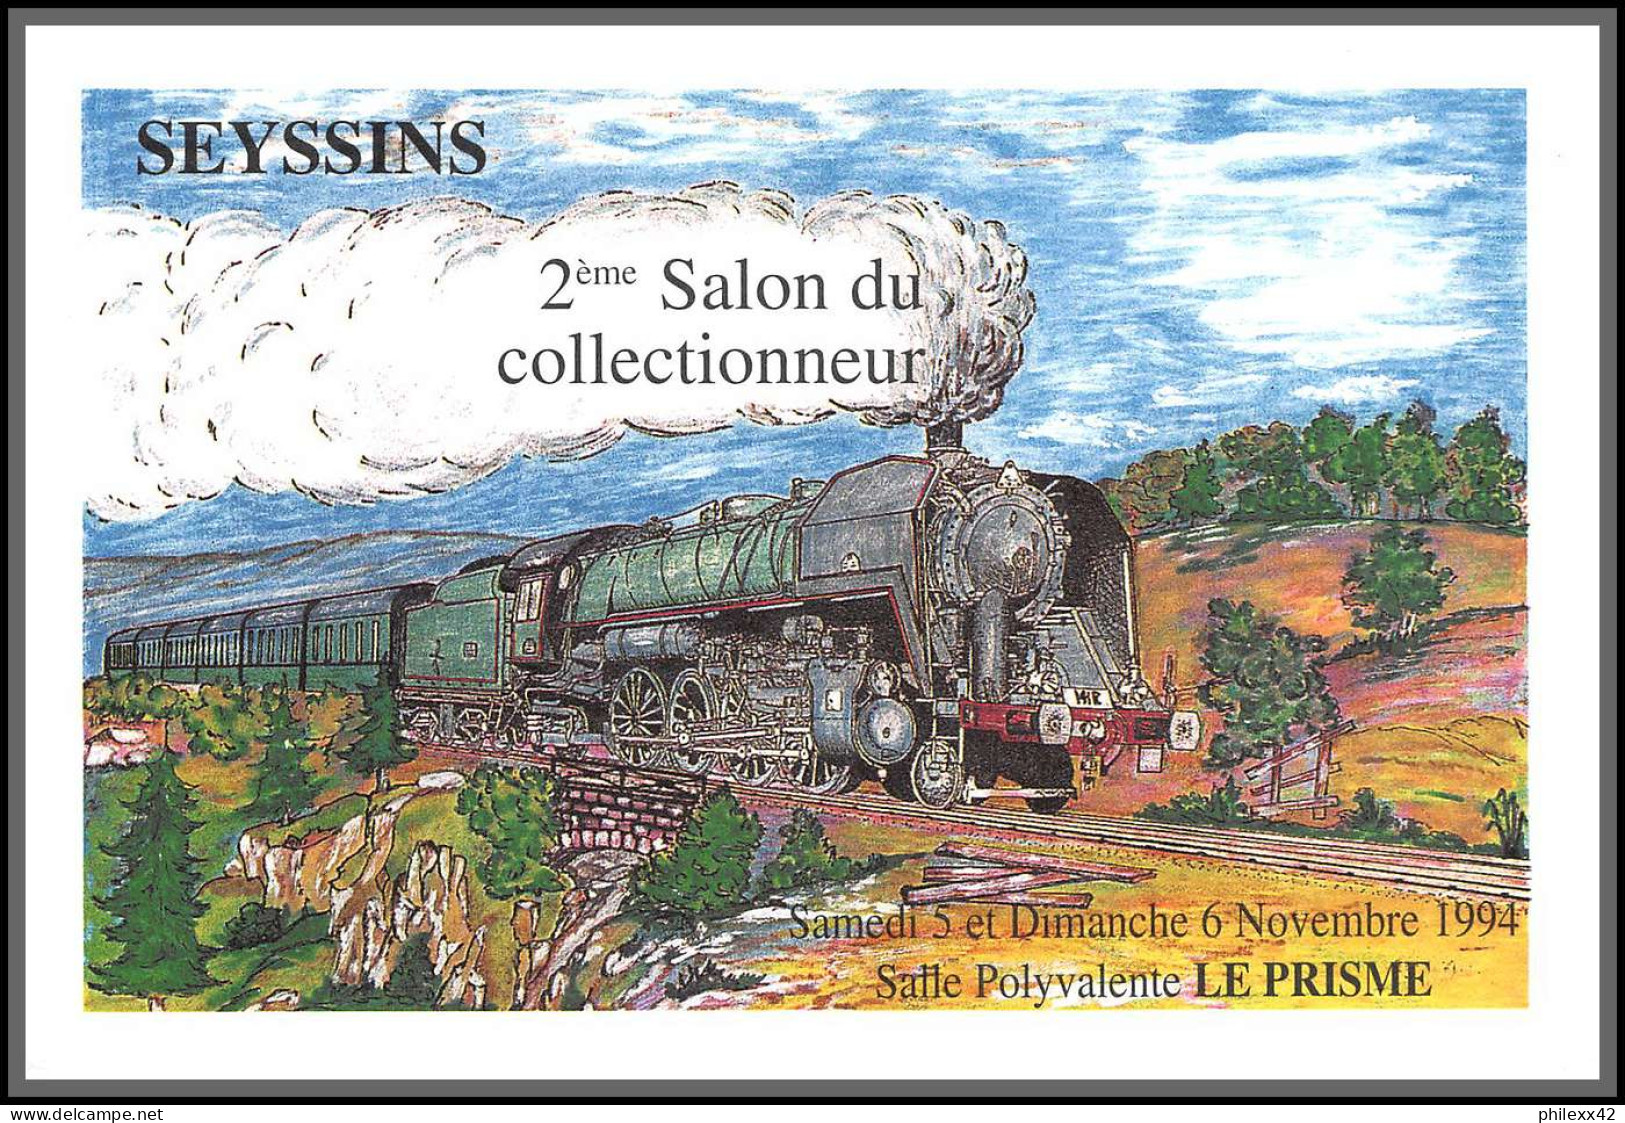 74241 Mixte Atm Briat 4/3/1997 M'tsangamouji Mayotte Echirolles Isère France Carte Postcard Colonies - Lettres & Documents